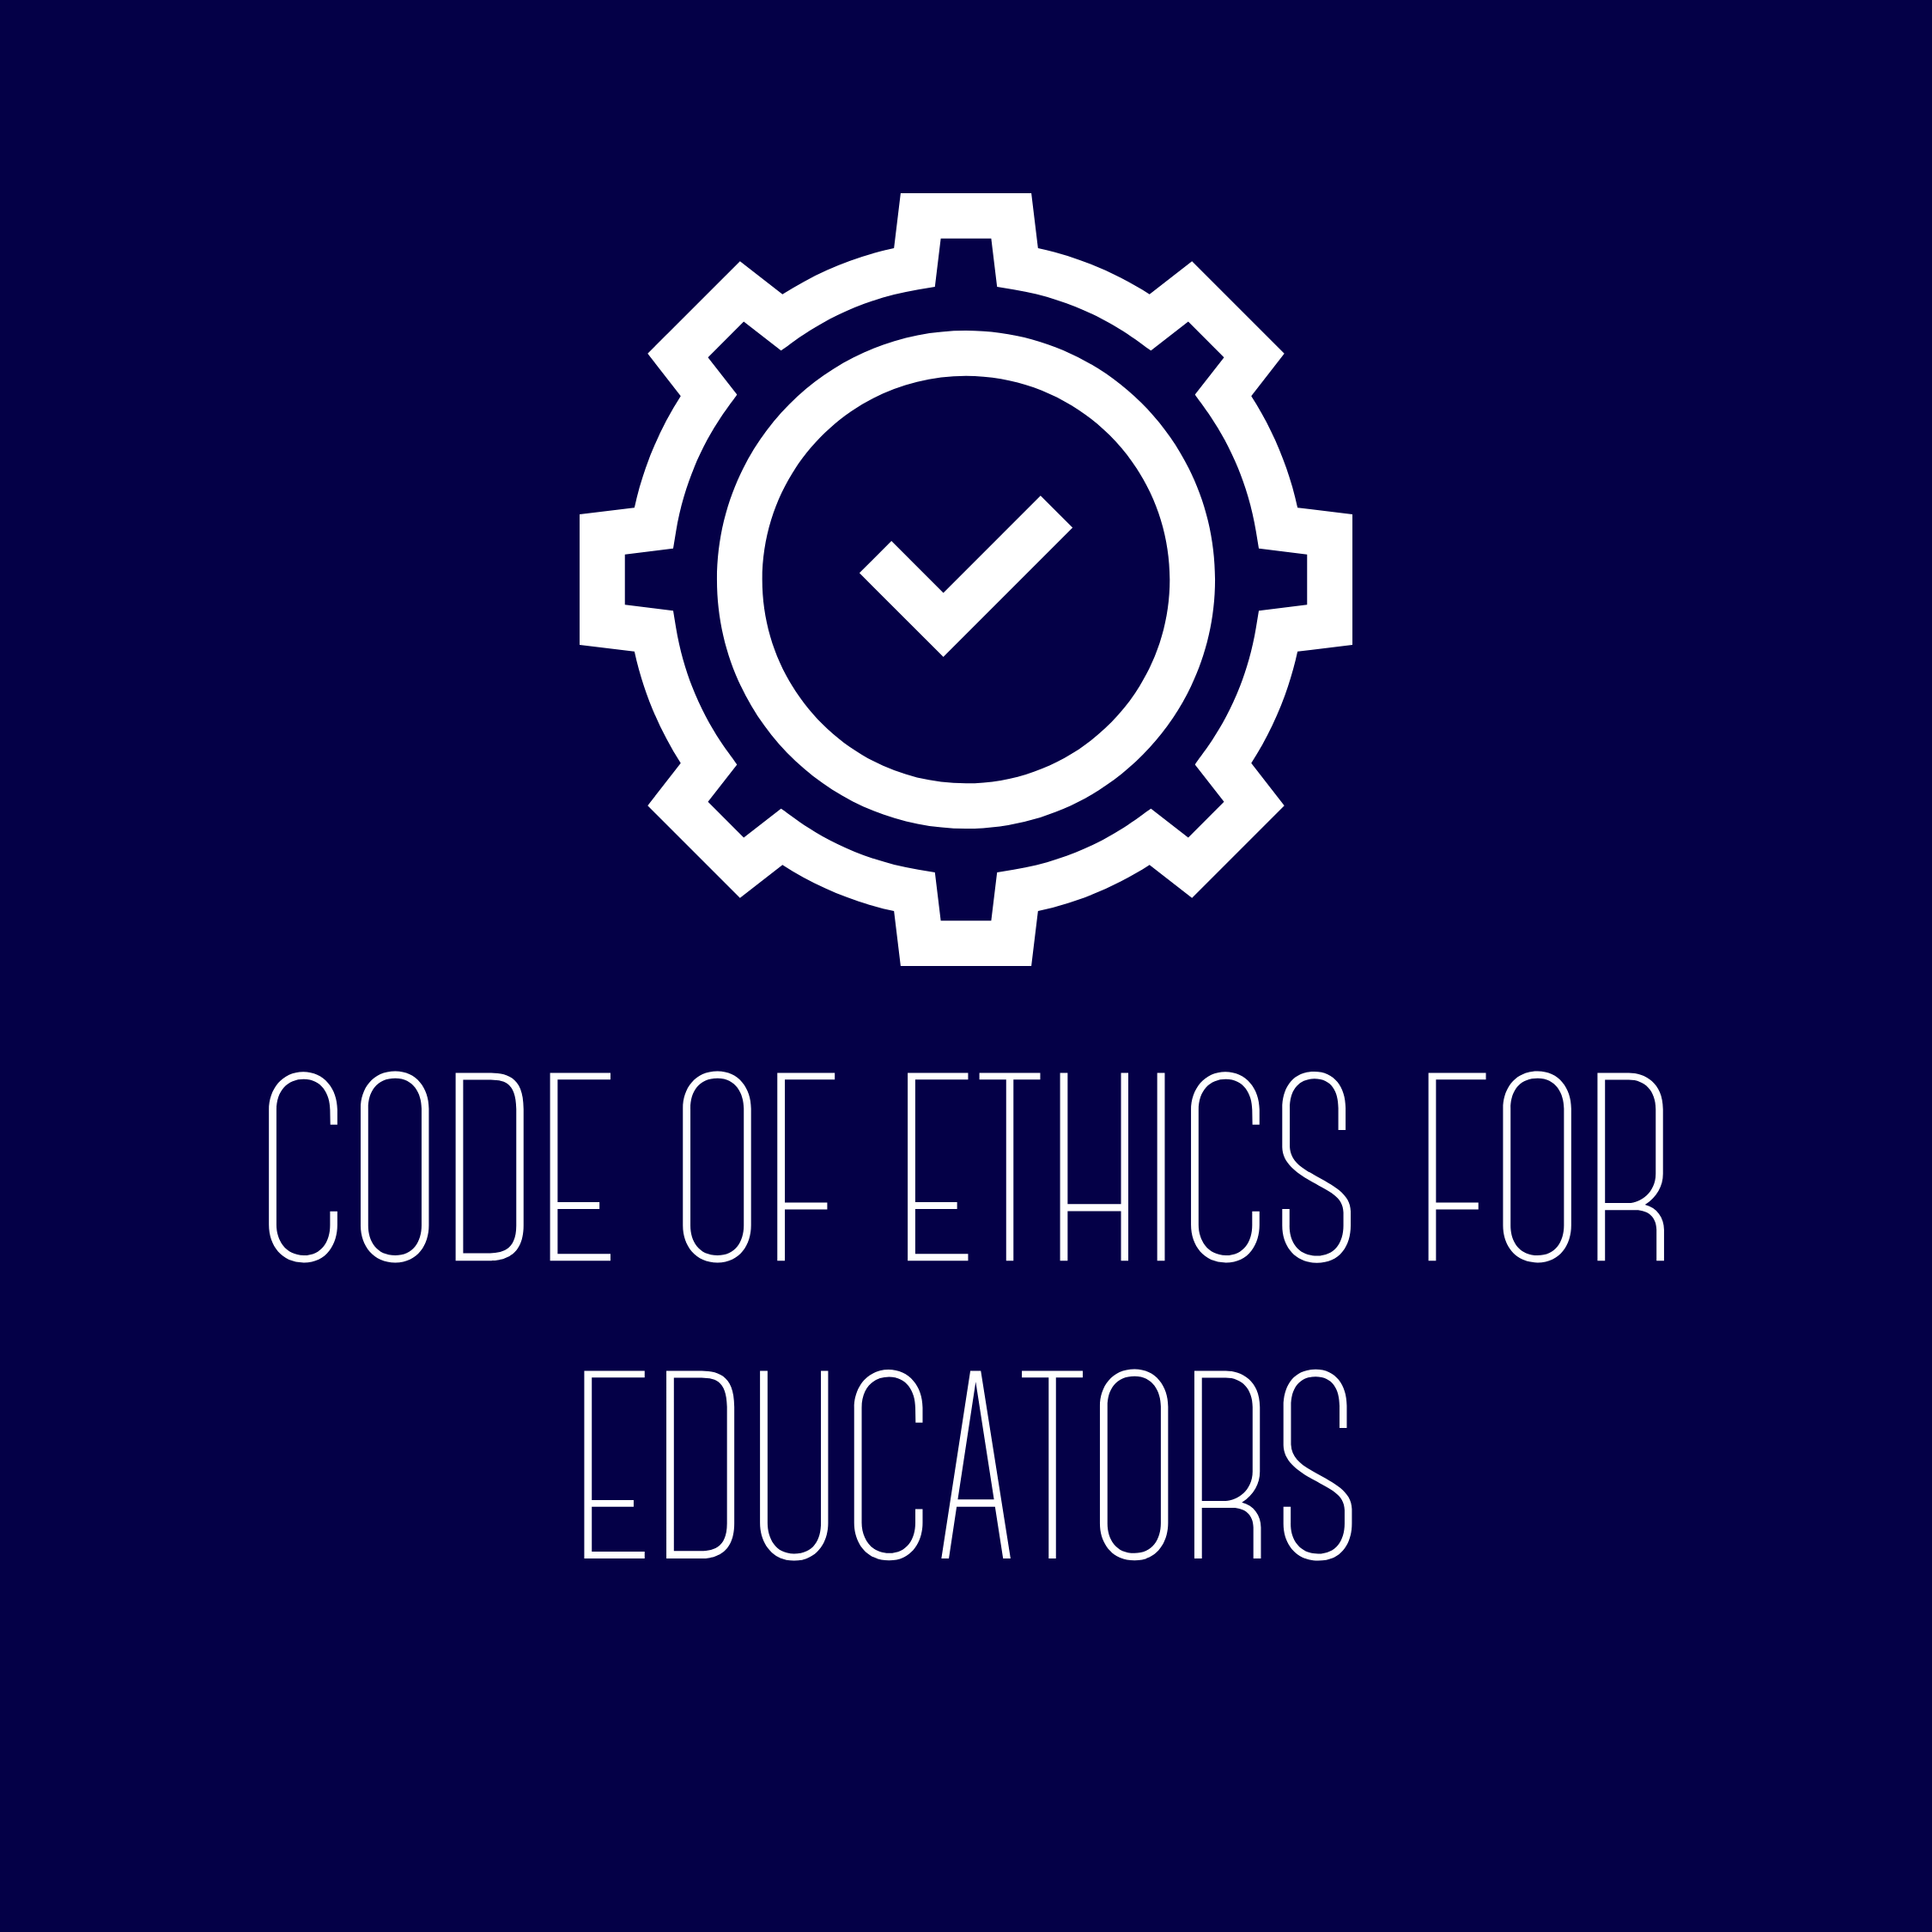 Code of Ethics for Educators